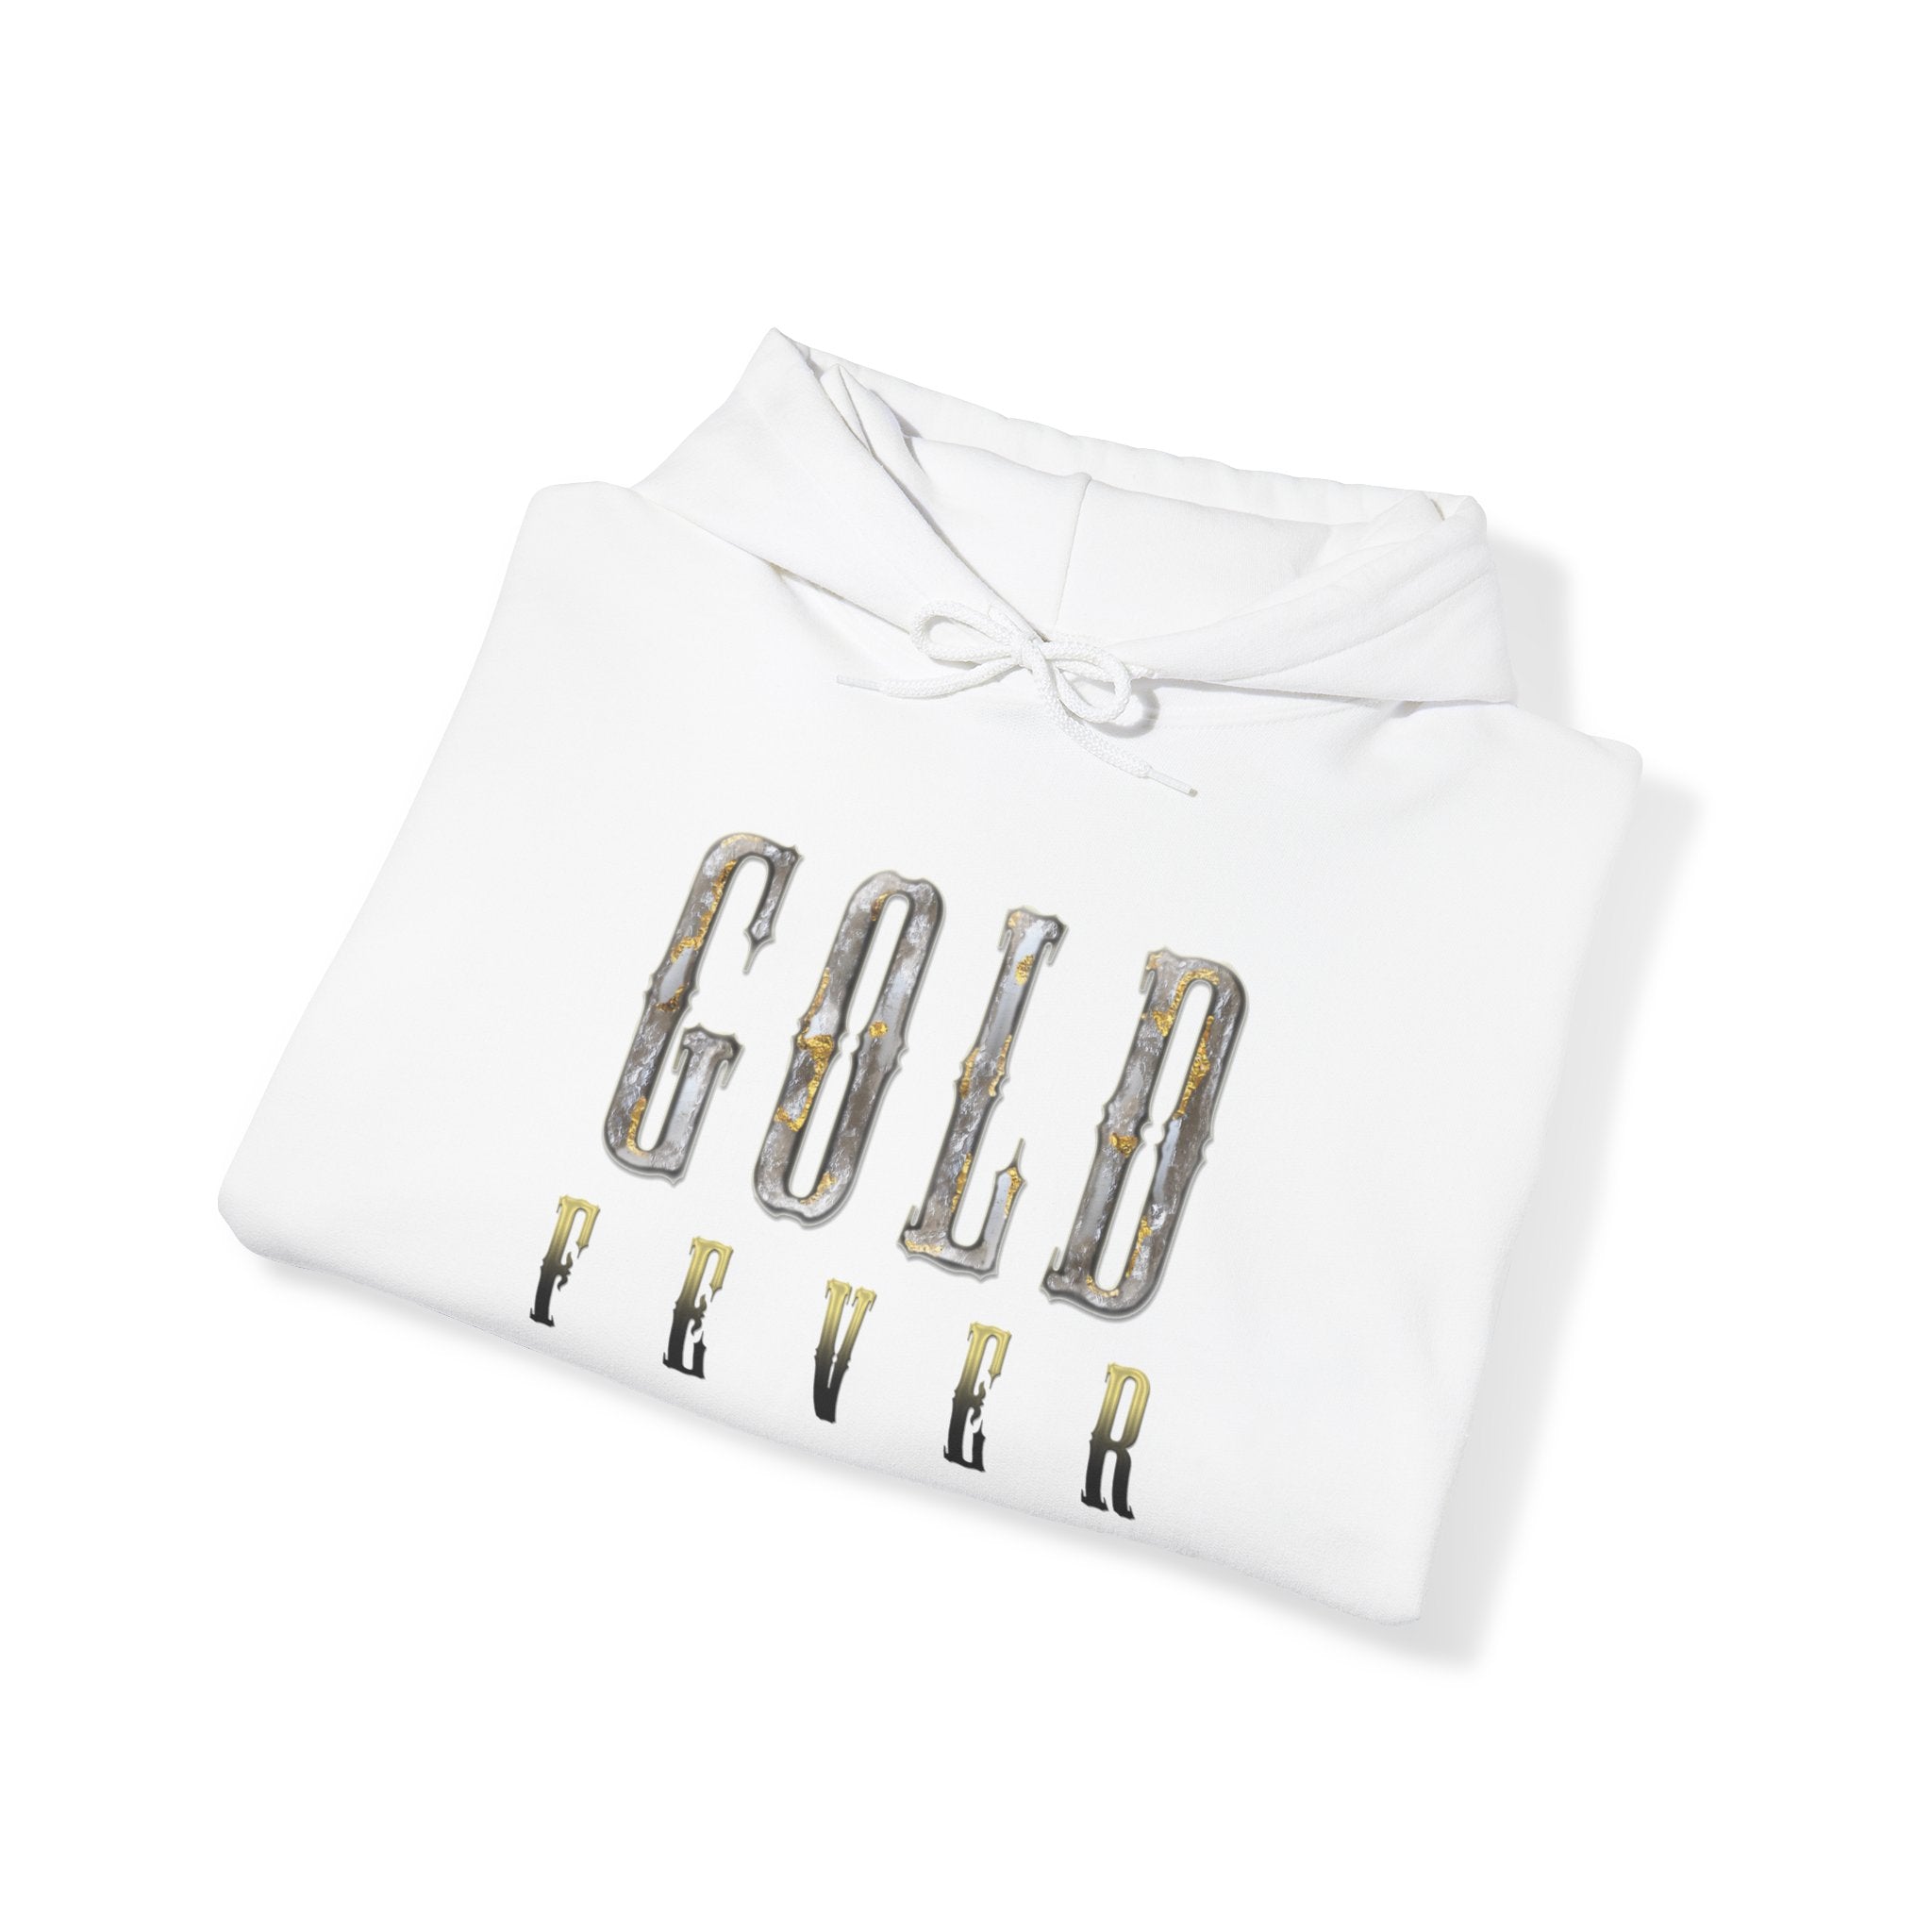 The OG Gold Fever Hooded Sweatshirt